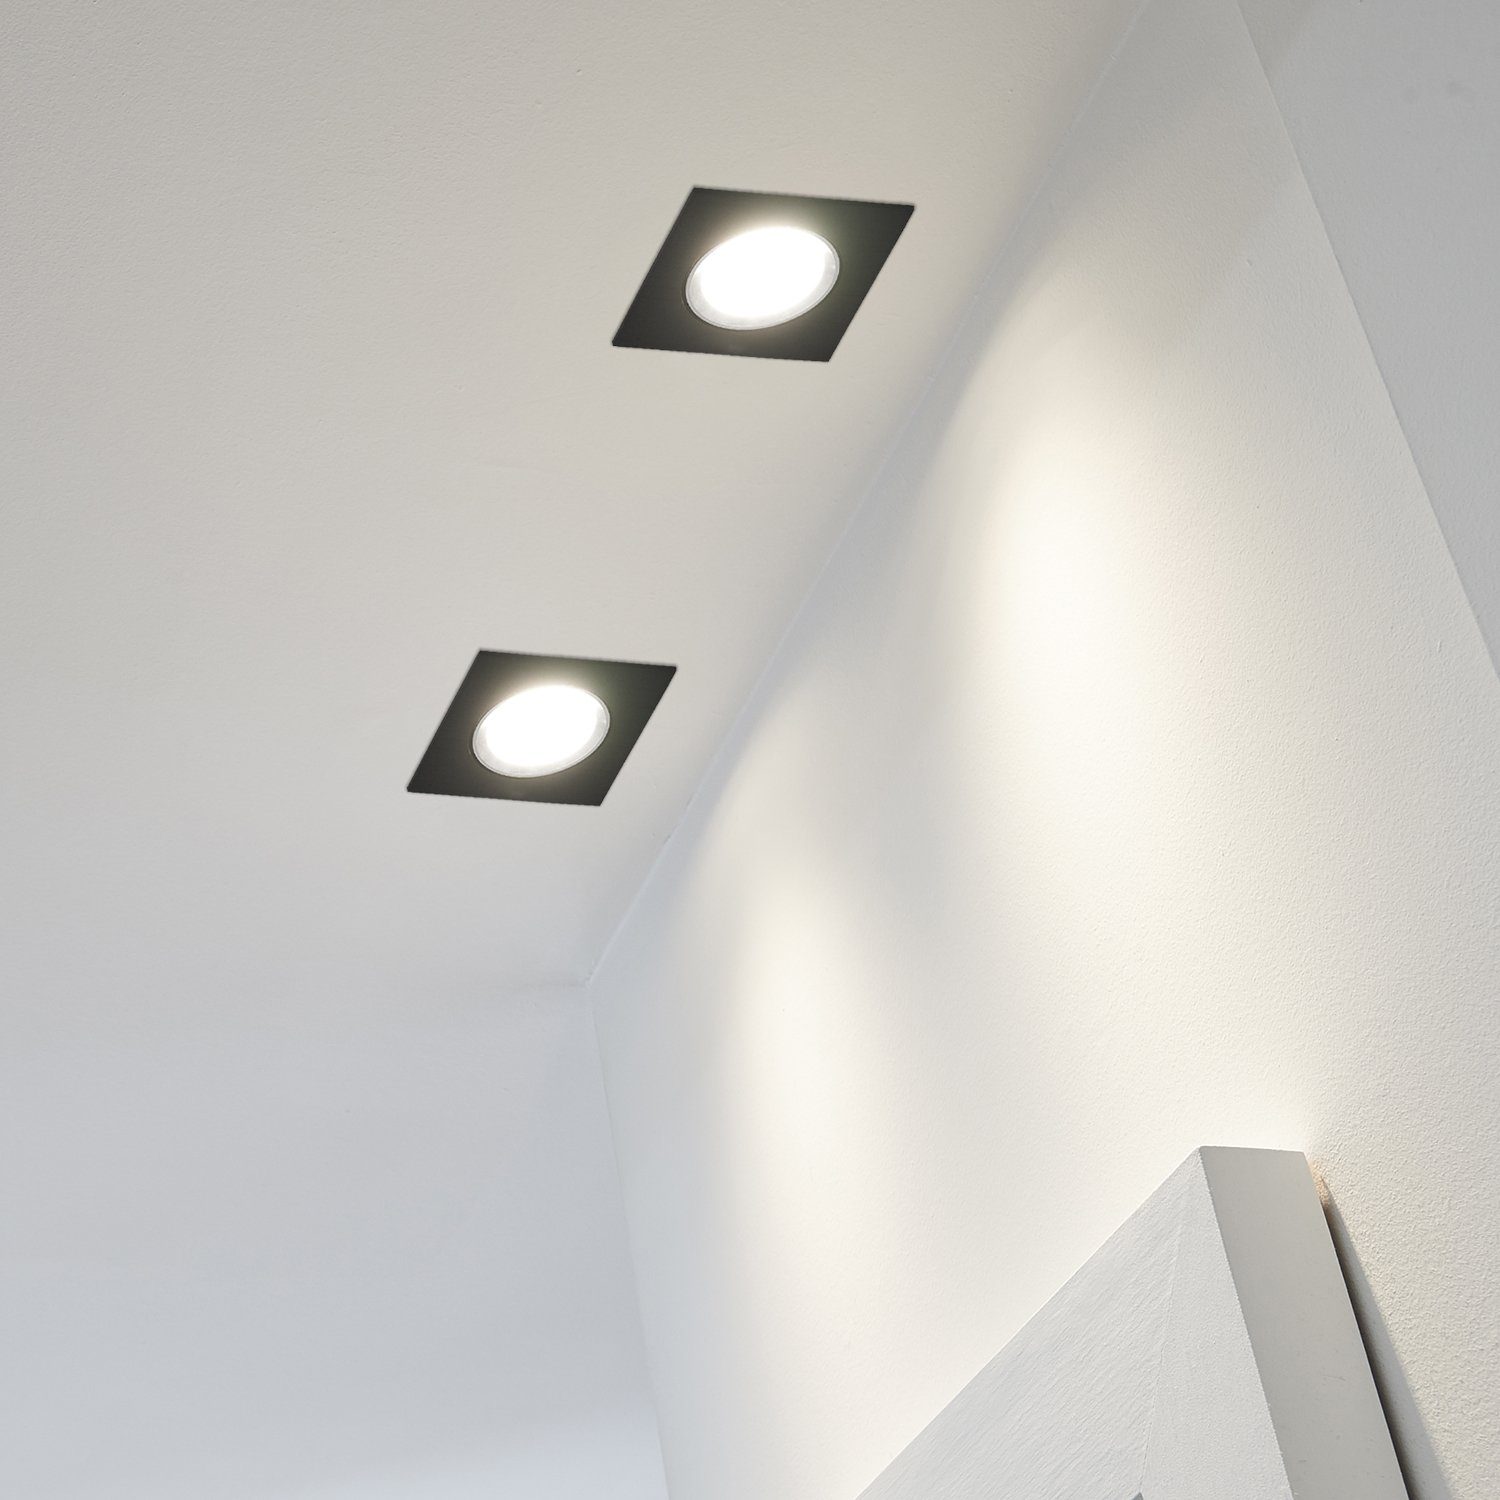 LEDANDO LED Einbaustrahler von flach extra in 5W Einbaustrahler Set schwarz LEDAN LED LED 3er mit